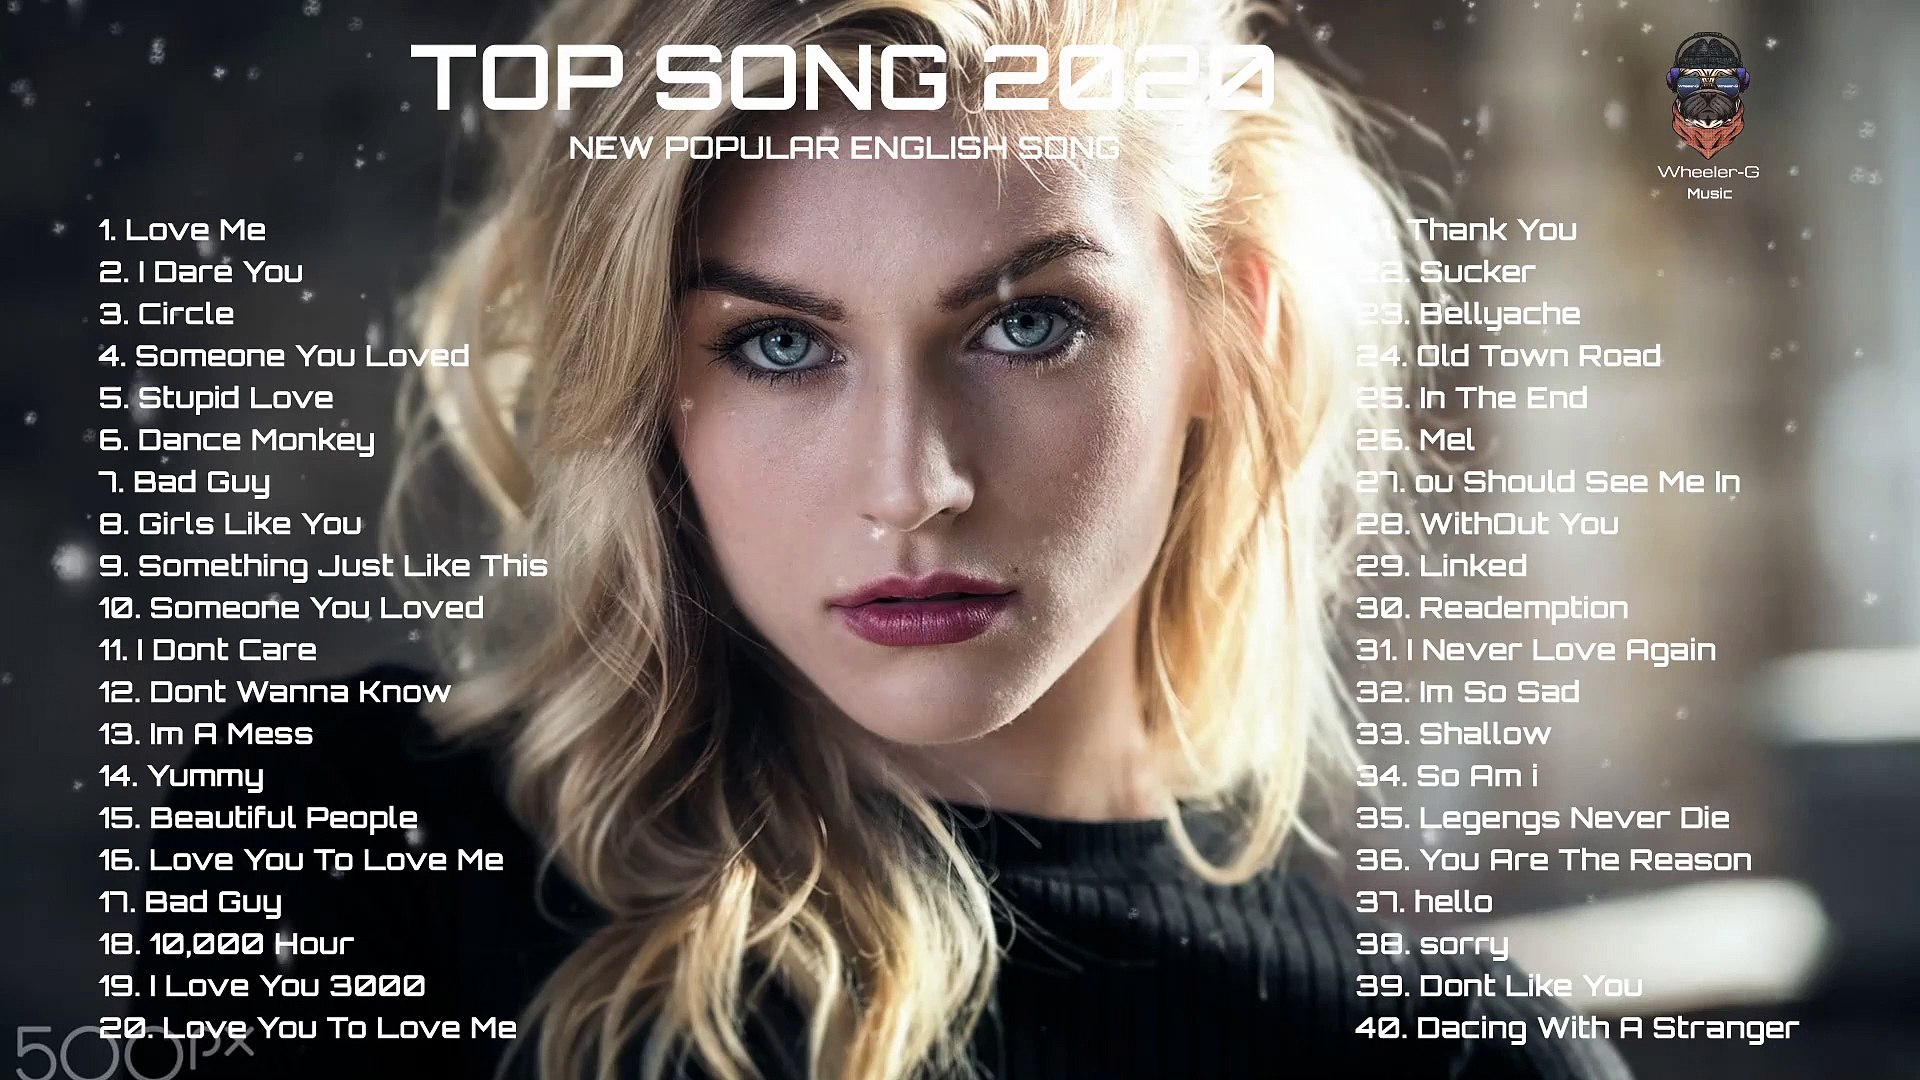 Music Top 50 Song - Music Billboard - Music Top Songs 2020 - [Wheeler-G